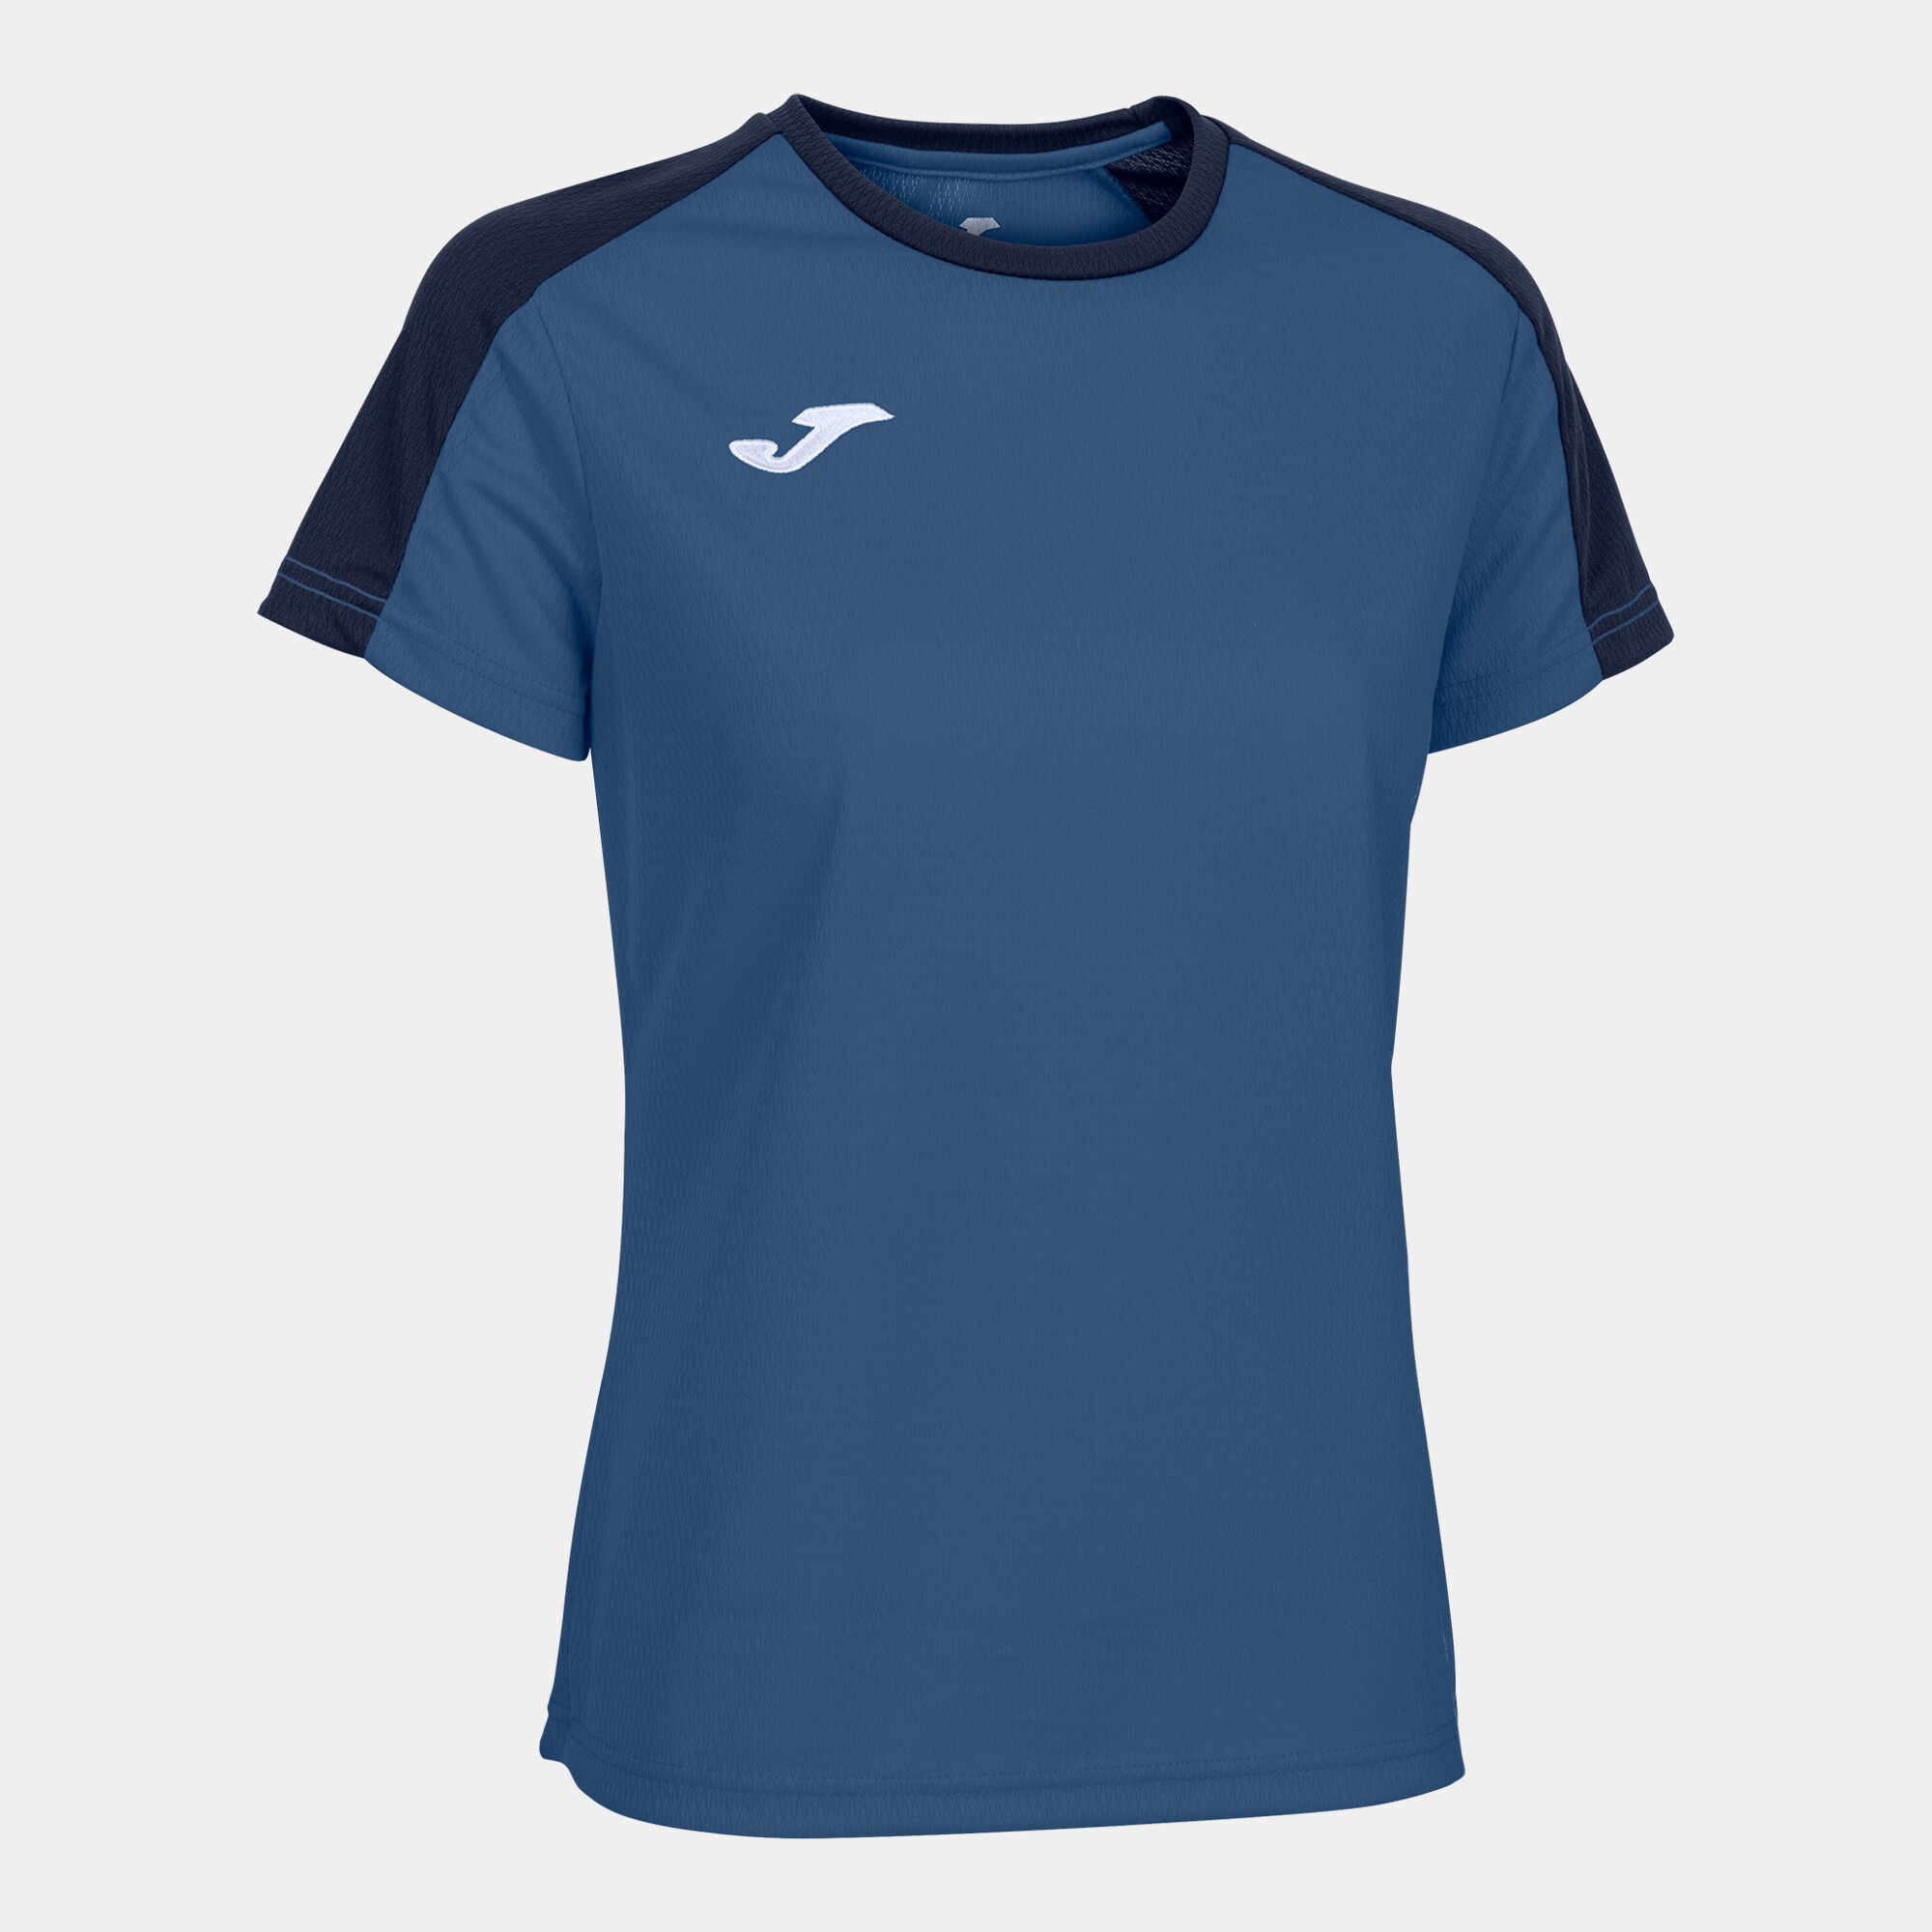 Волейбольна футболка жіноча Joma ECO CHAMPIONSHIP Acero/Dark navy